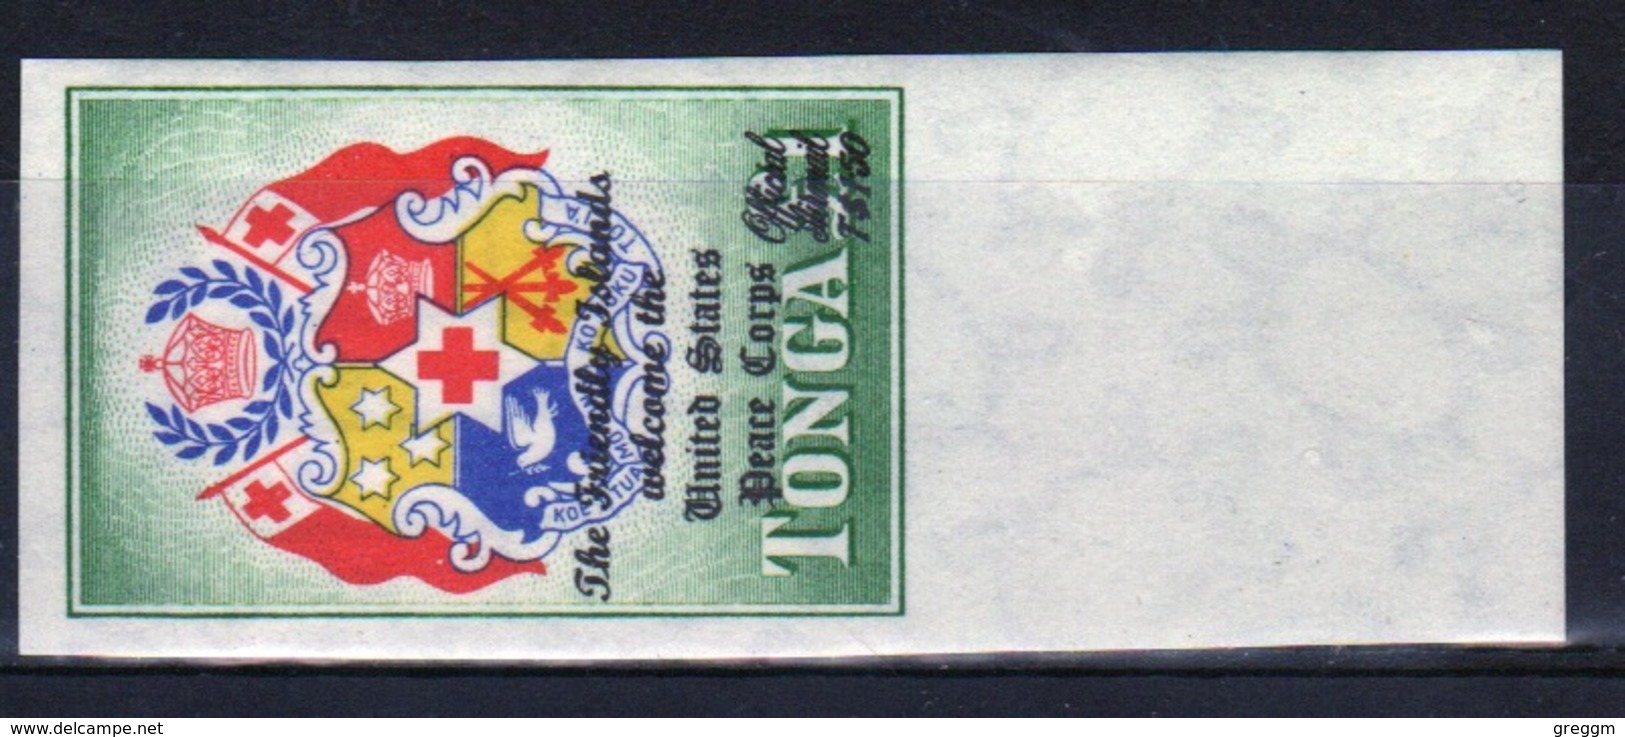 Tonga 1967 Single Stamp From The 'Arrival Of The Peace Corp In Tonga' Set. - Tonga (...-1970)